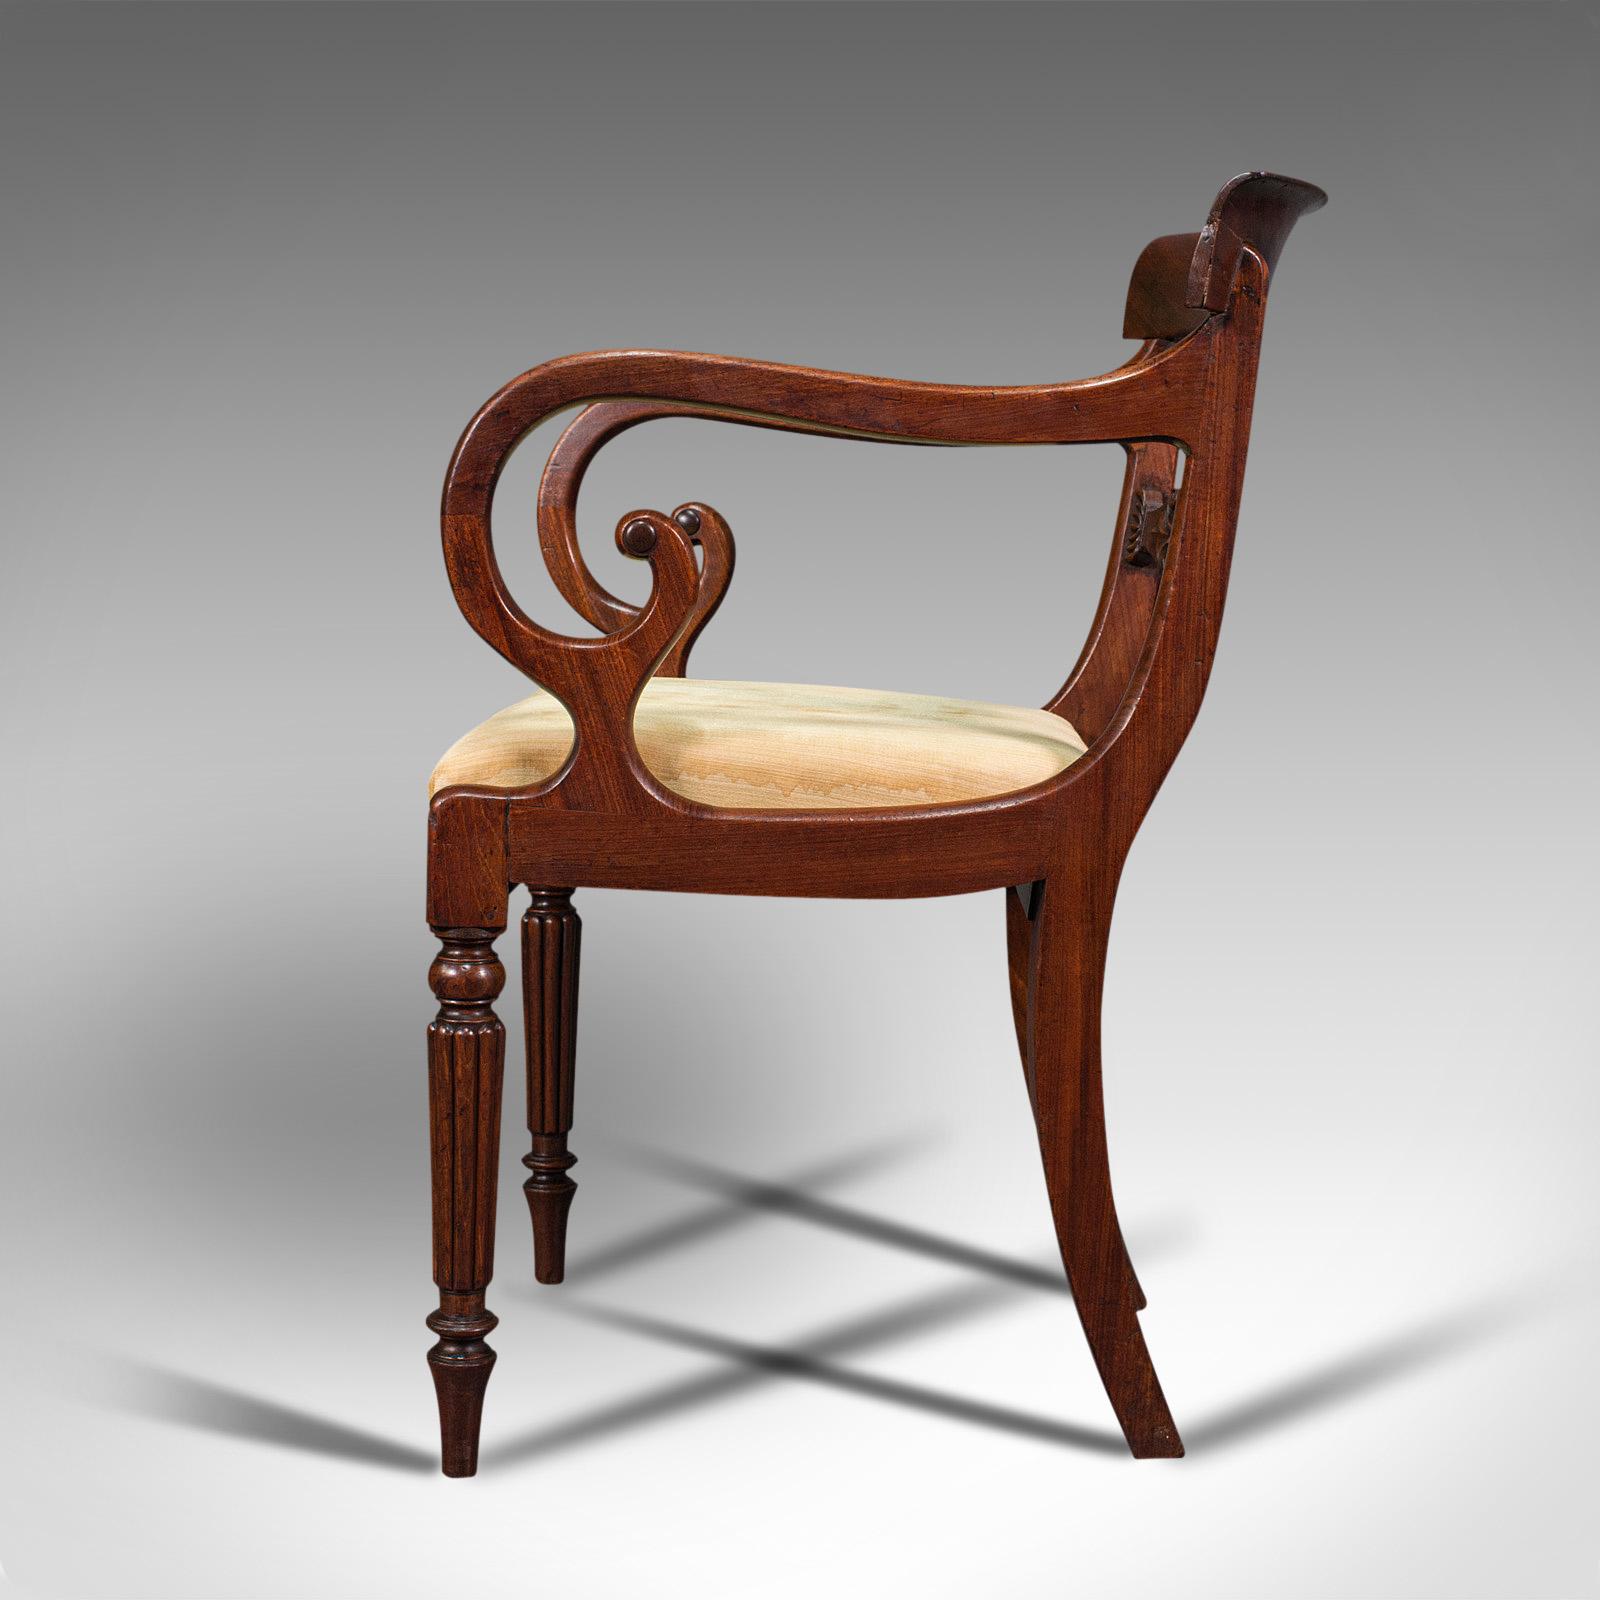 19th Century Antique Elbow Chair, English, Mahogany, Carver, Drop in Seat, Regency, C.1820